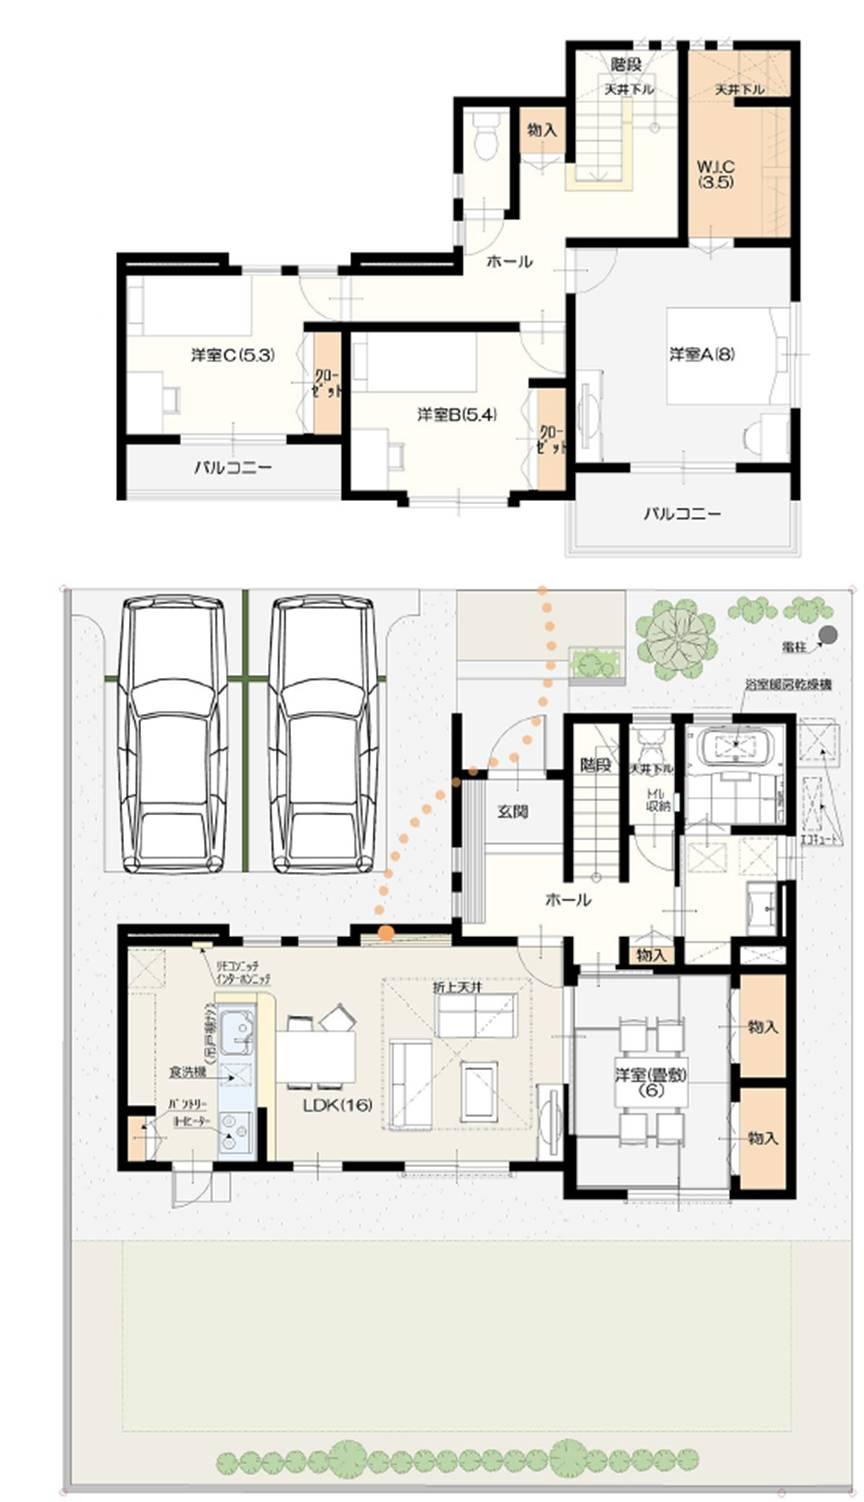 Floor plan. (No. 9 locations), Price 26,800,000 yen, 4LDK, Land area 189.57 sq m , Building area 112.73 sq m